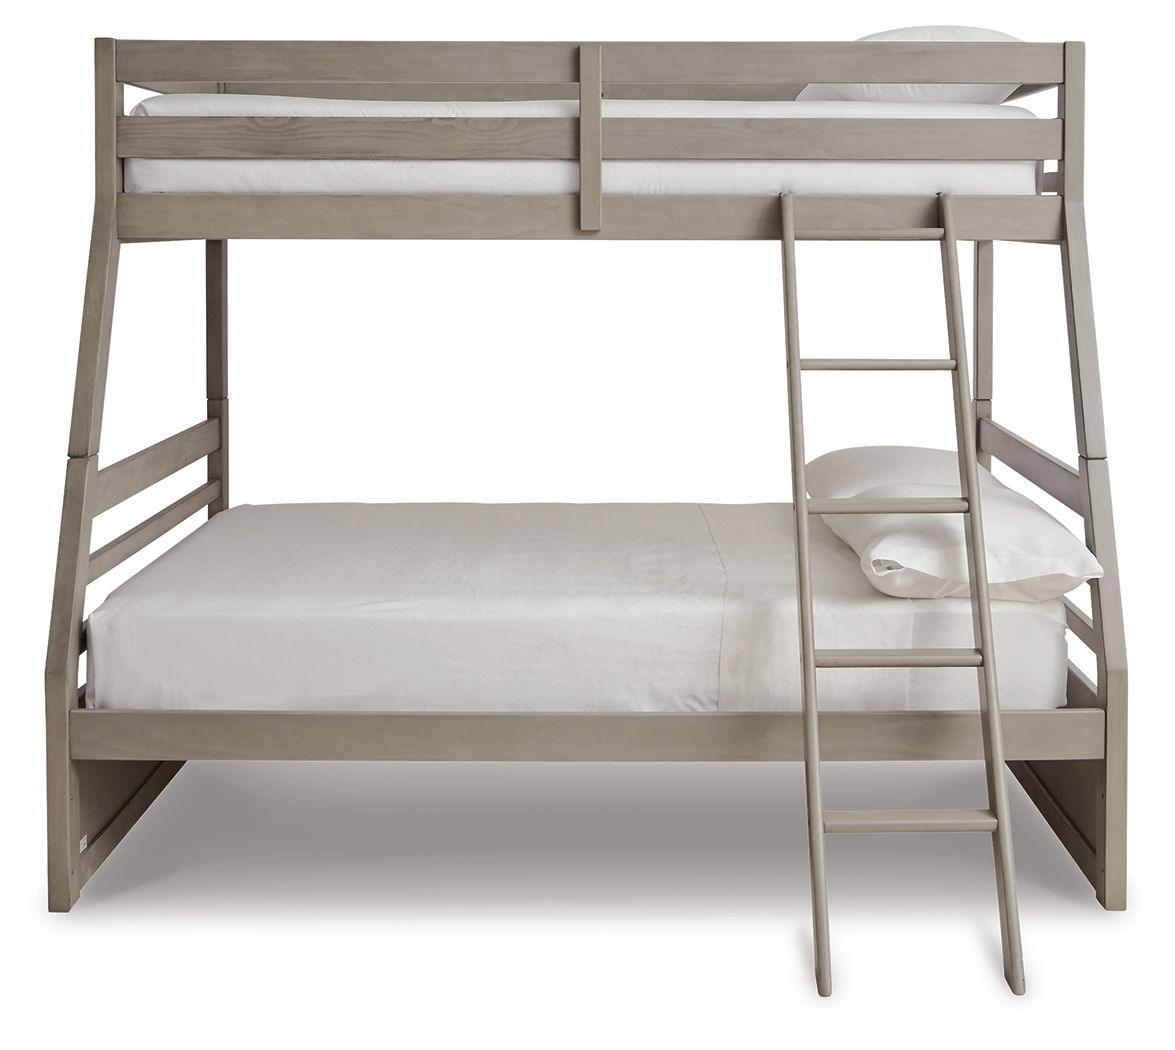 Ashley Furniture - Lettner - Bunk Bed W/Ladder - 5th Avenue Furniture